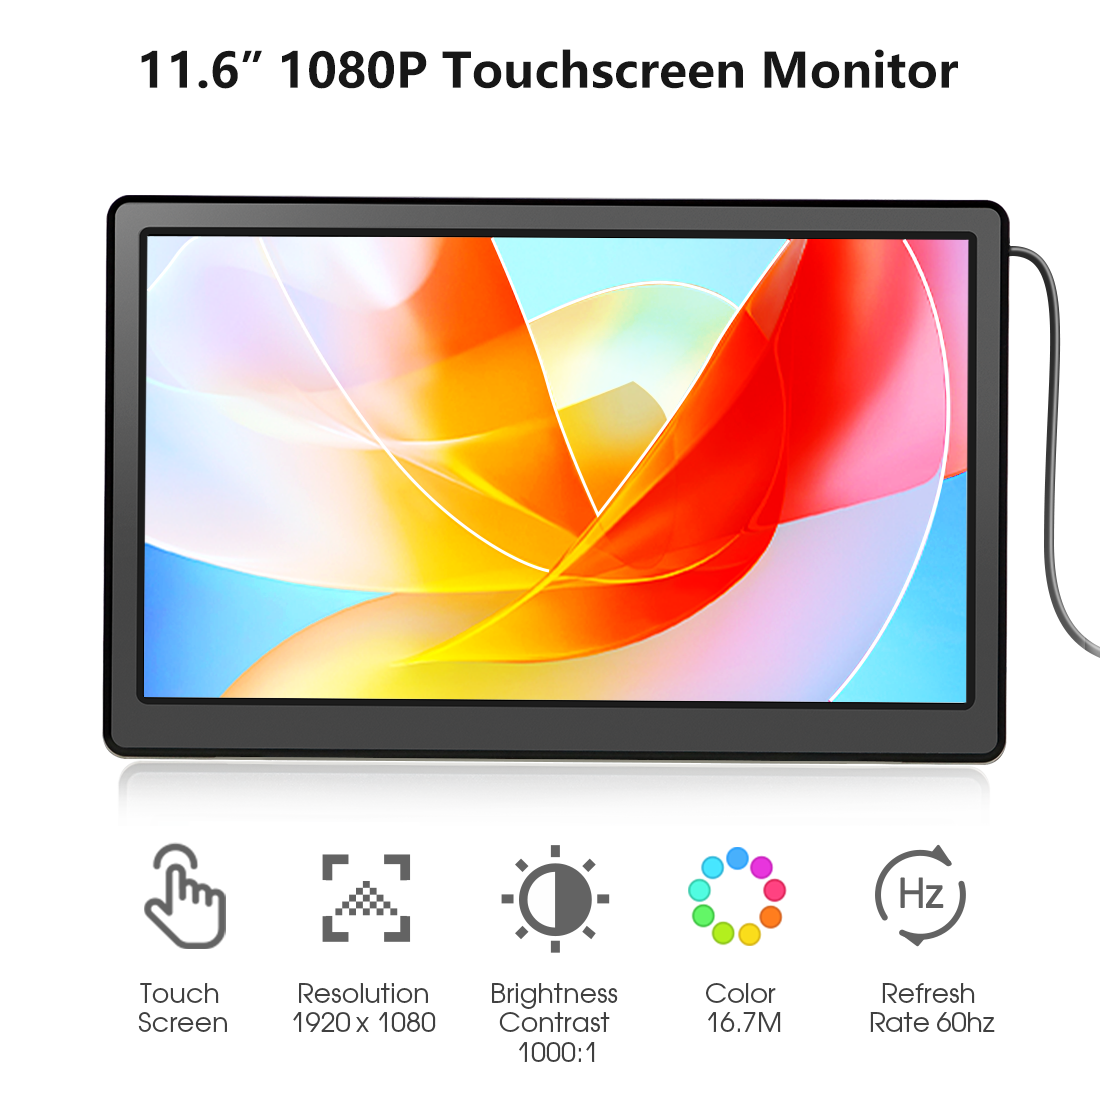 11.6 inch 1080P Touchscreen Monitor